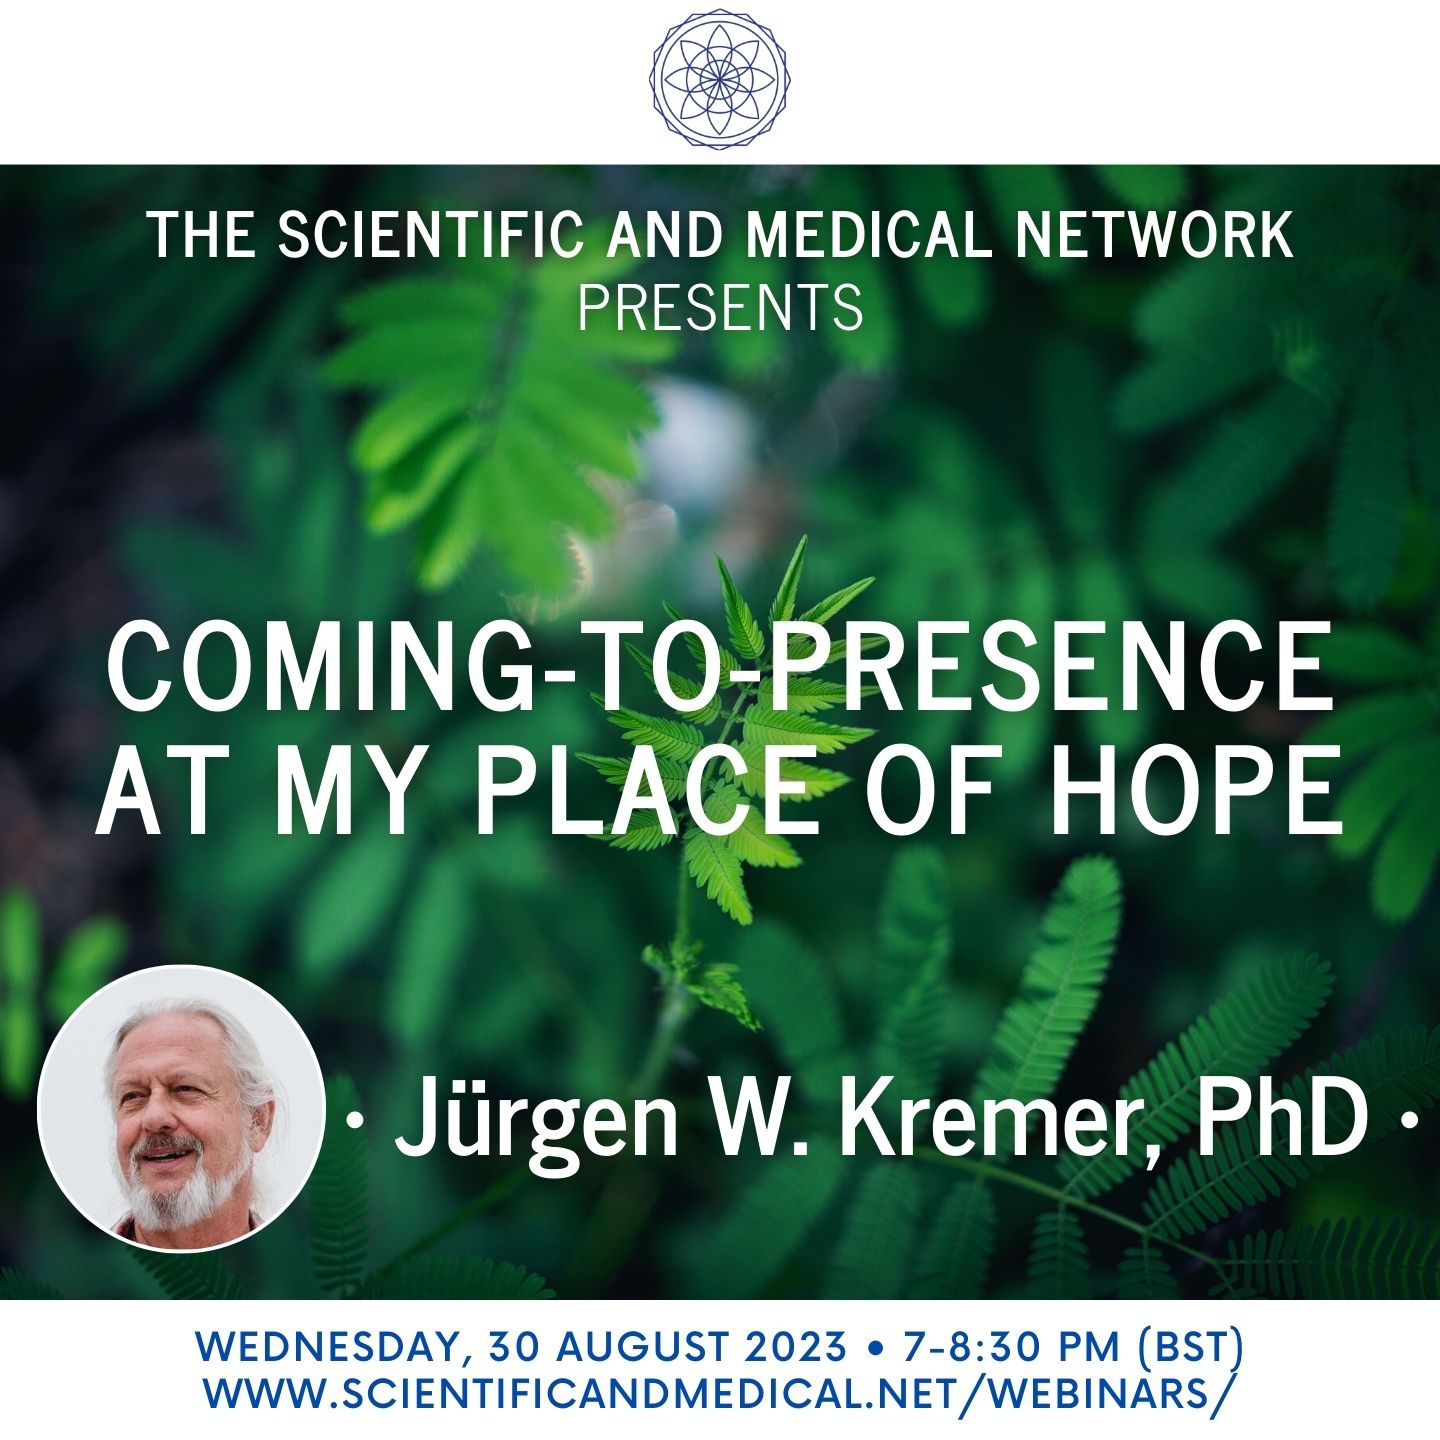 Jurgen Werner Kremer PhD – Coming to Presence at My Place of Hope